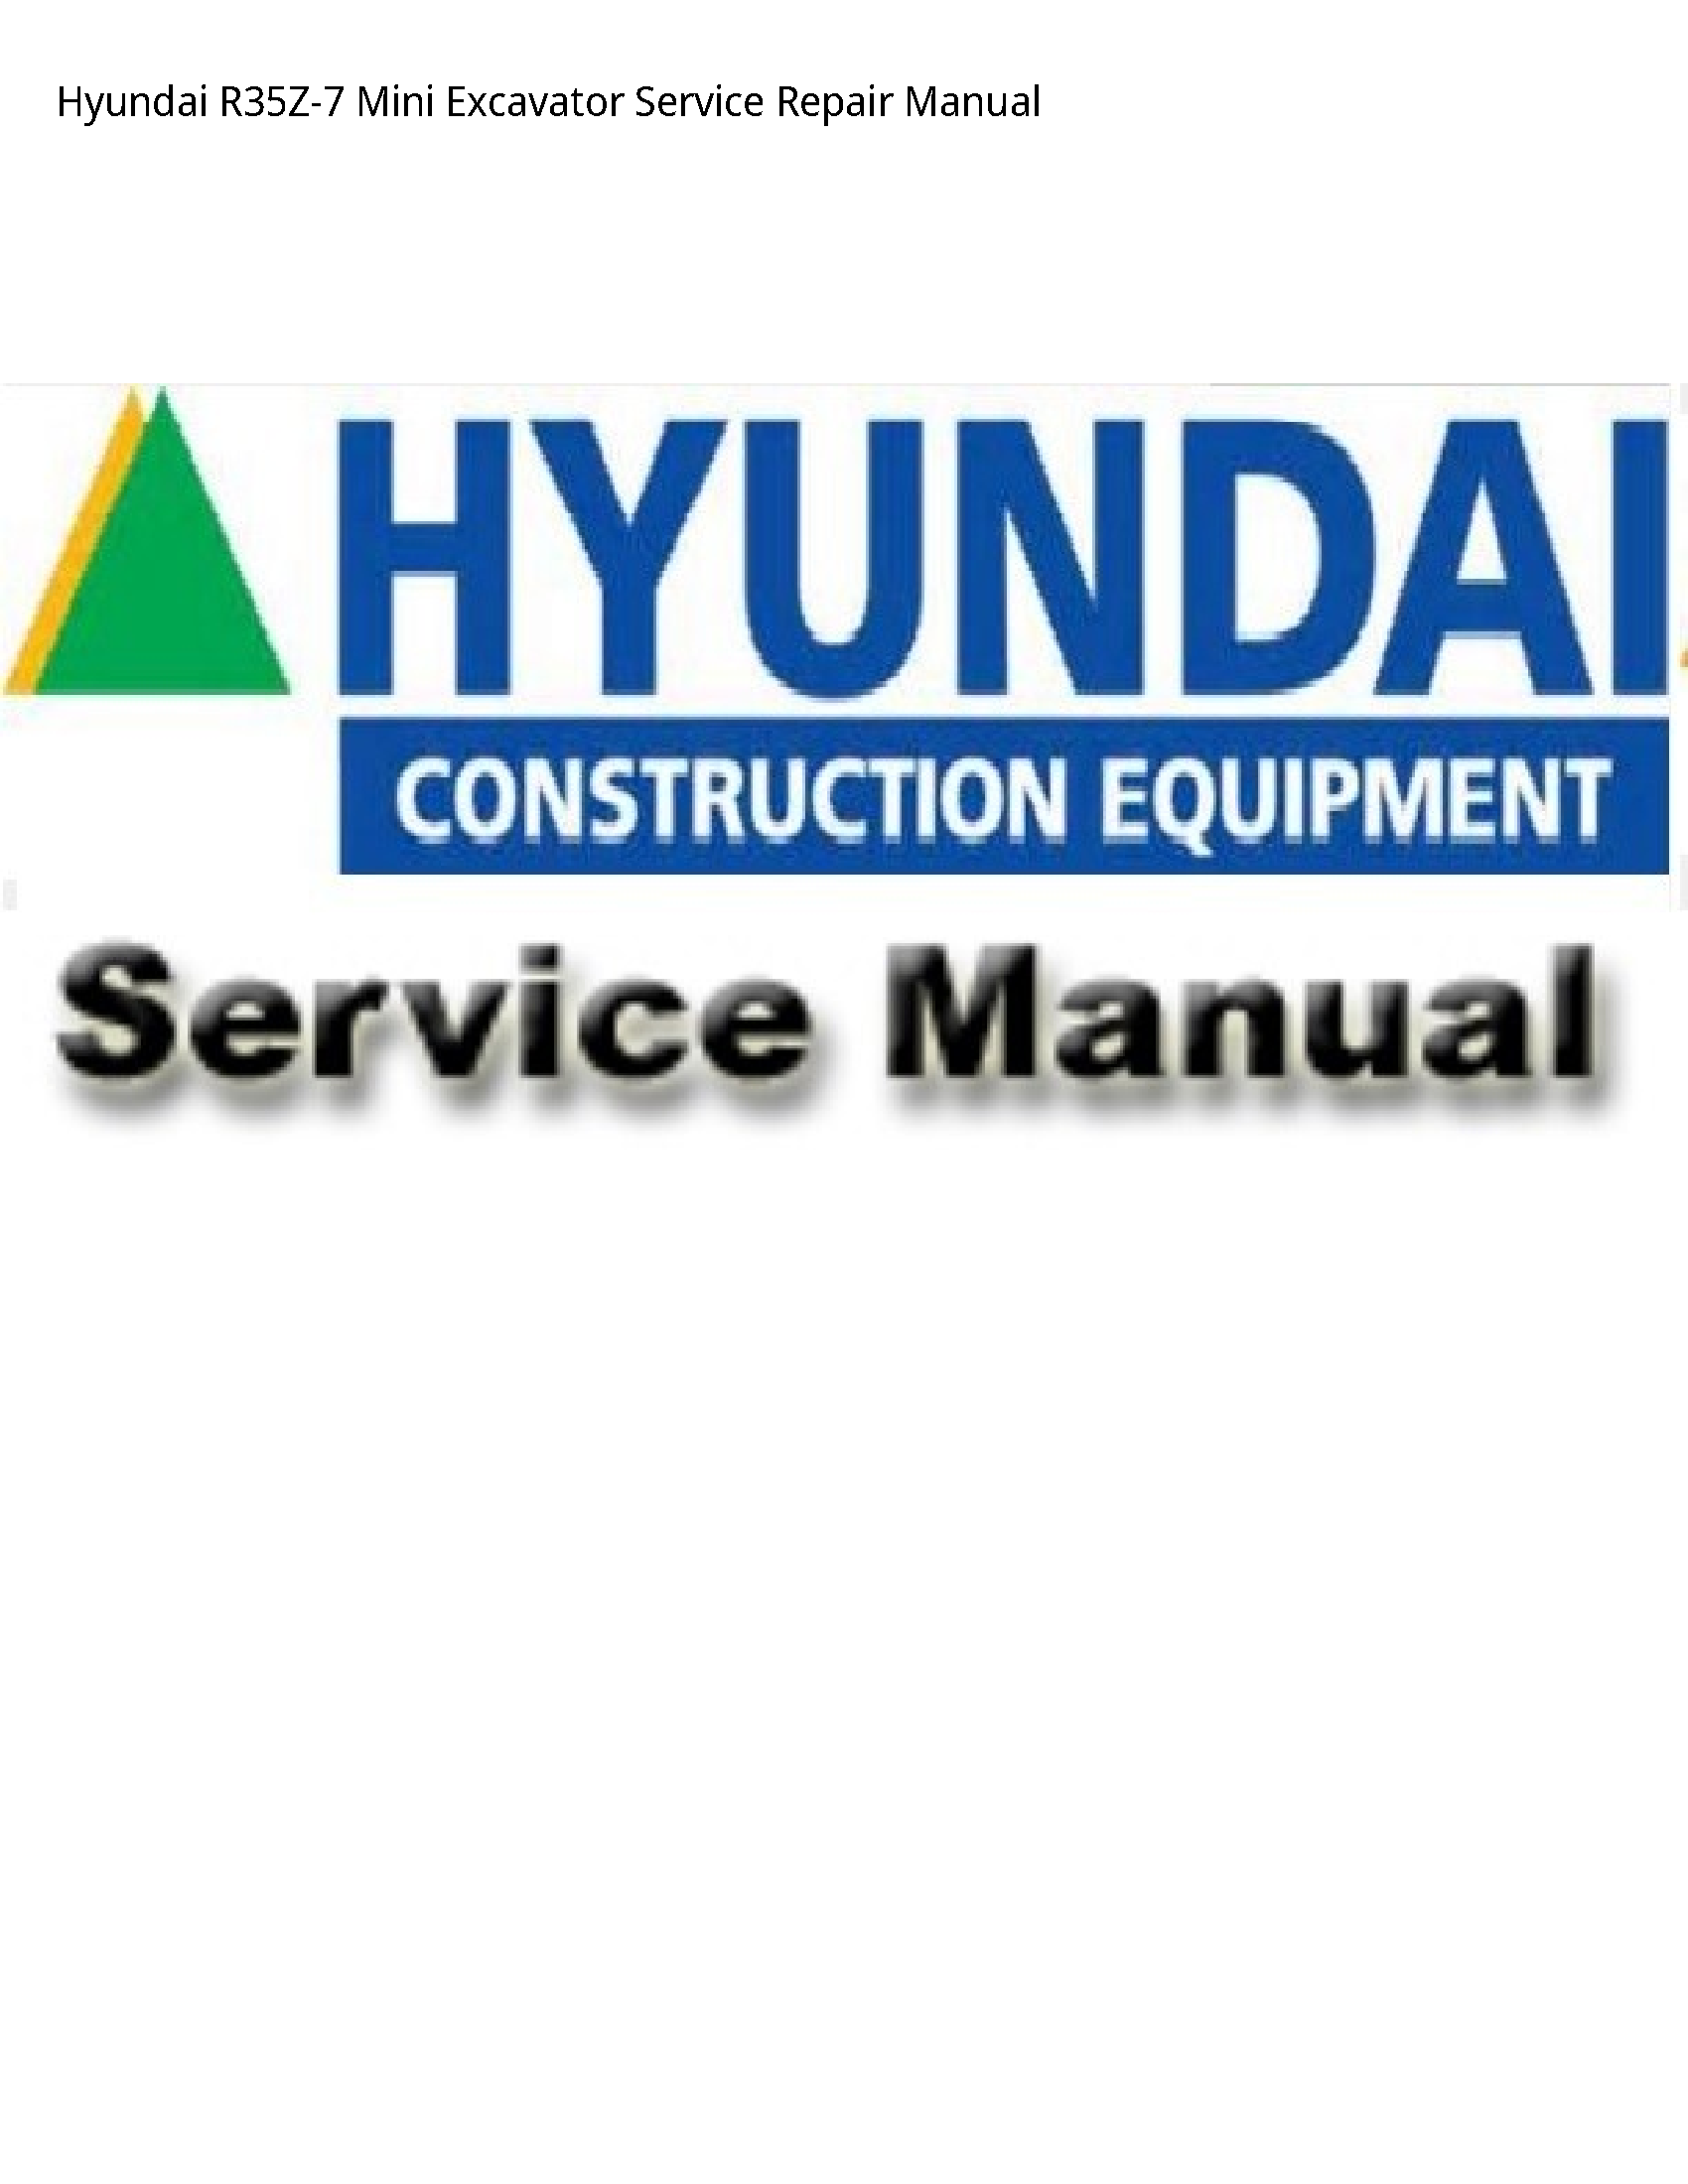 Hyundai R35Z-7 Mini Excavator manual